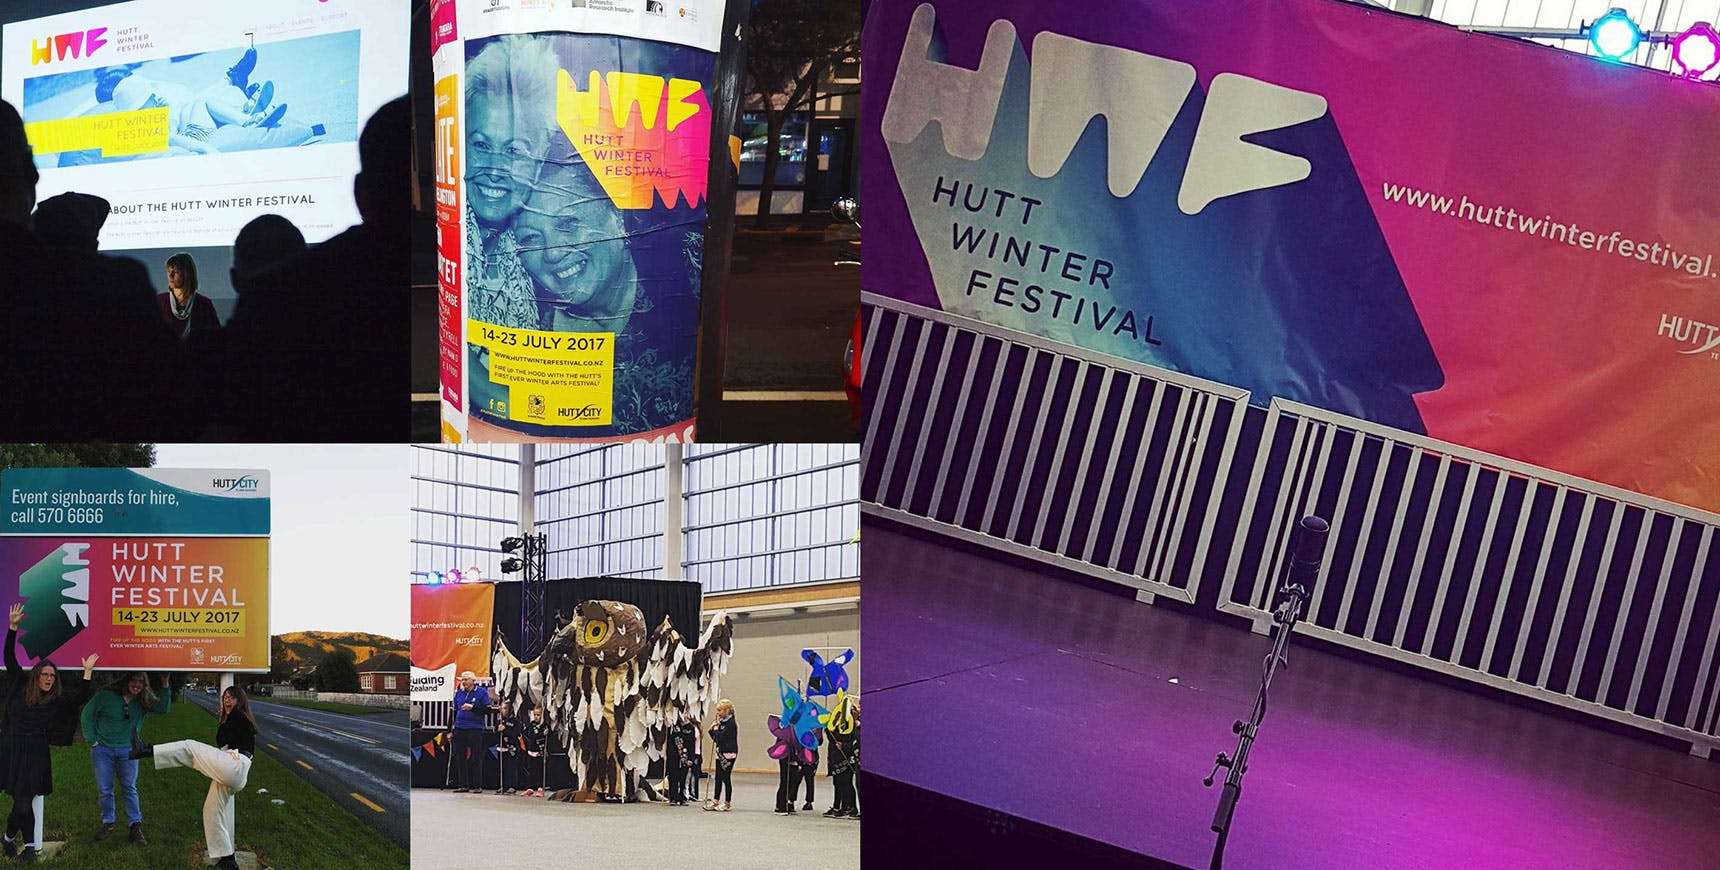 Hutt Winter Festival Event Photos